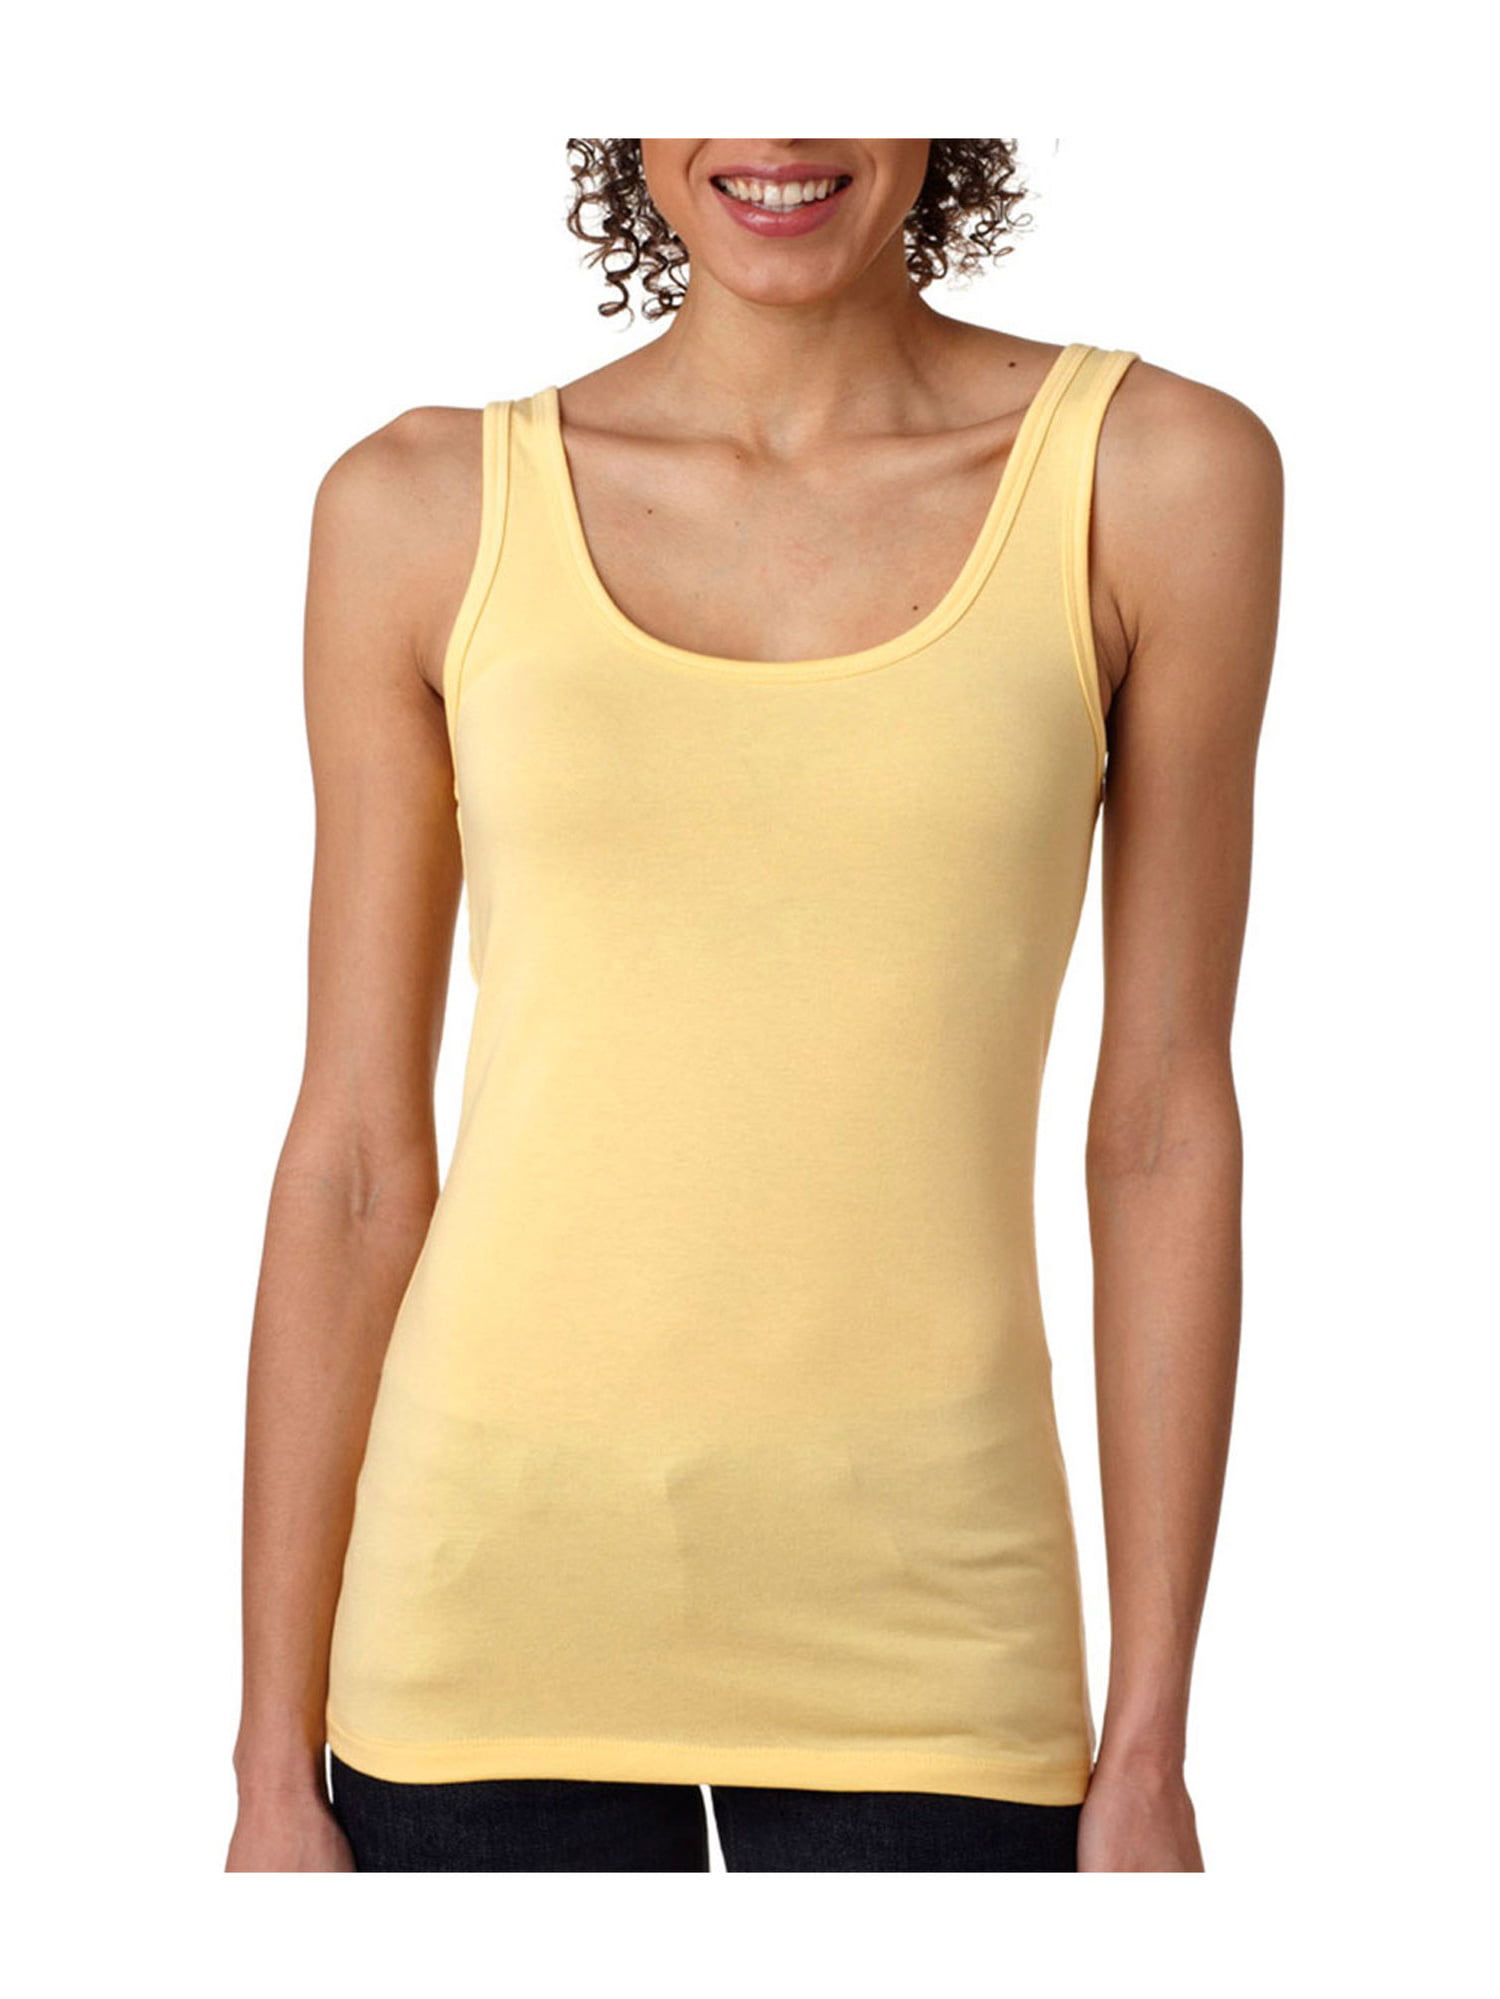 Womens Tank Tops Rainbow Sleeveless Yoga Shirts Summer Tops Loose Fit Running Athletic Shirts